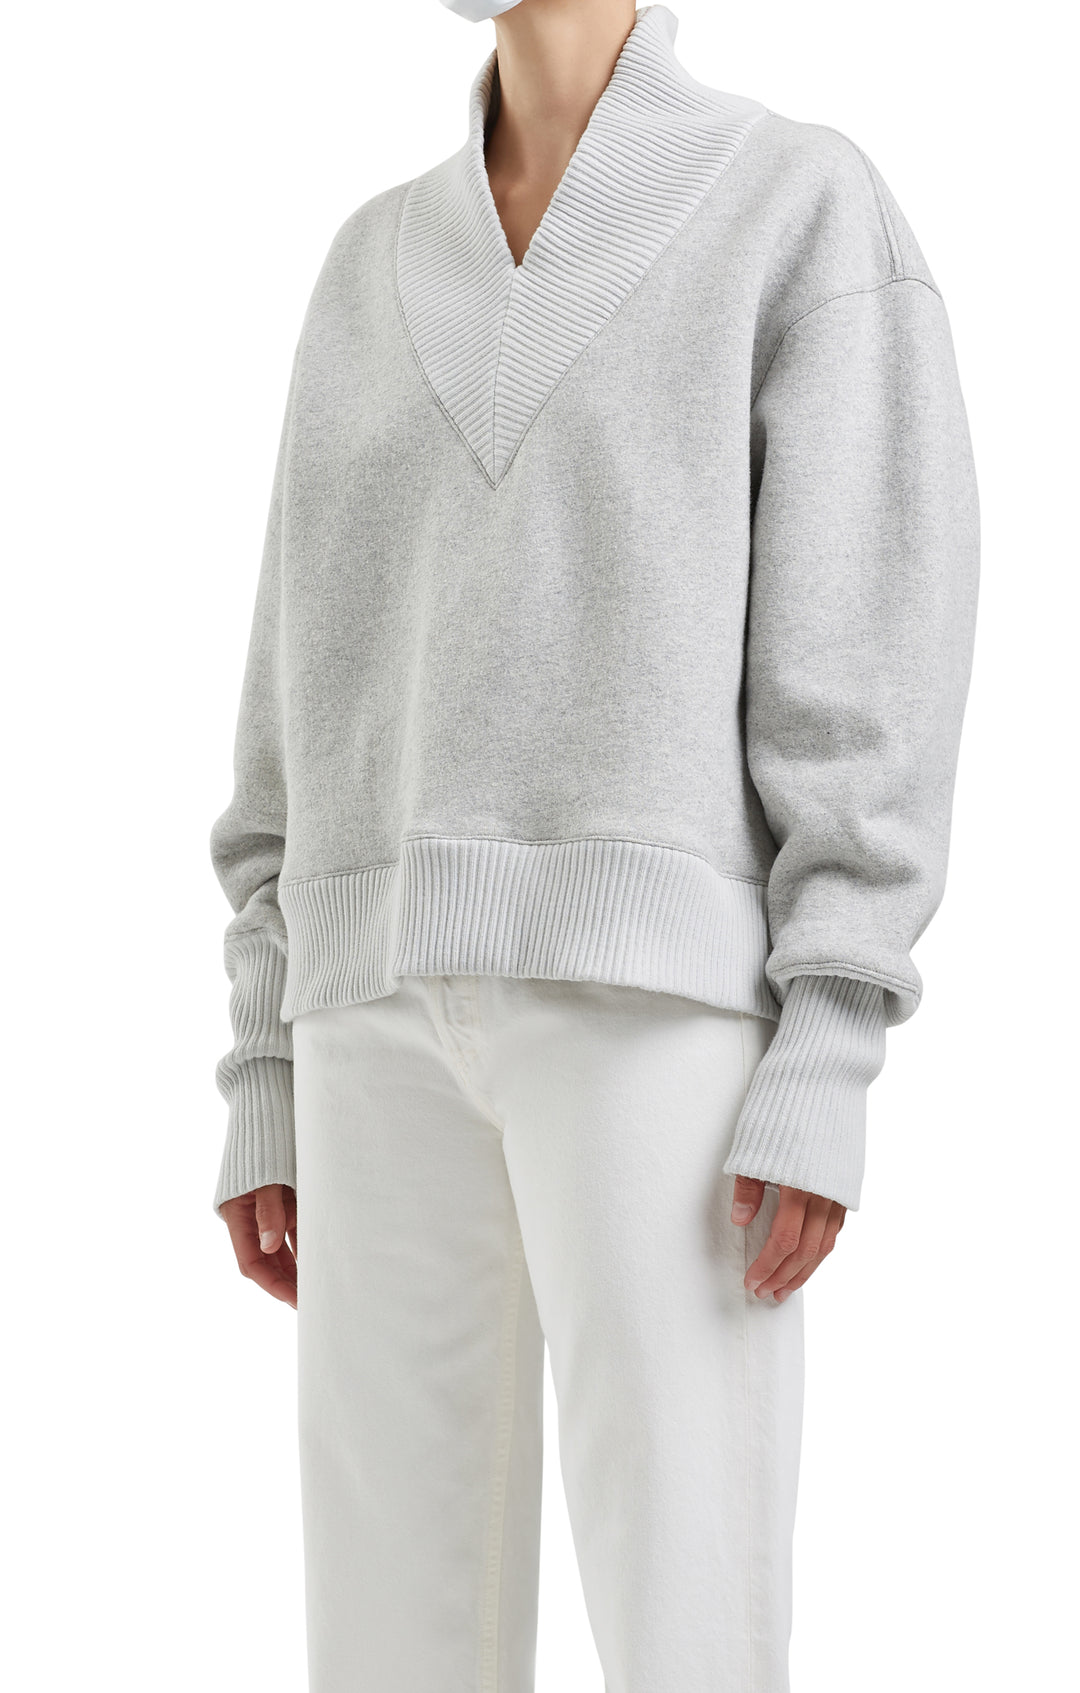 AGoldE - Klara Sweatshirt in Grey Heather